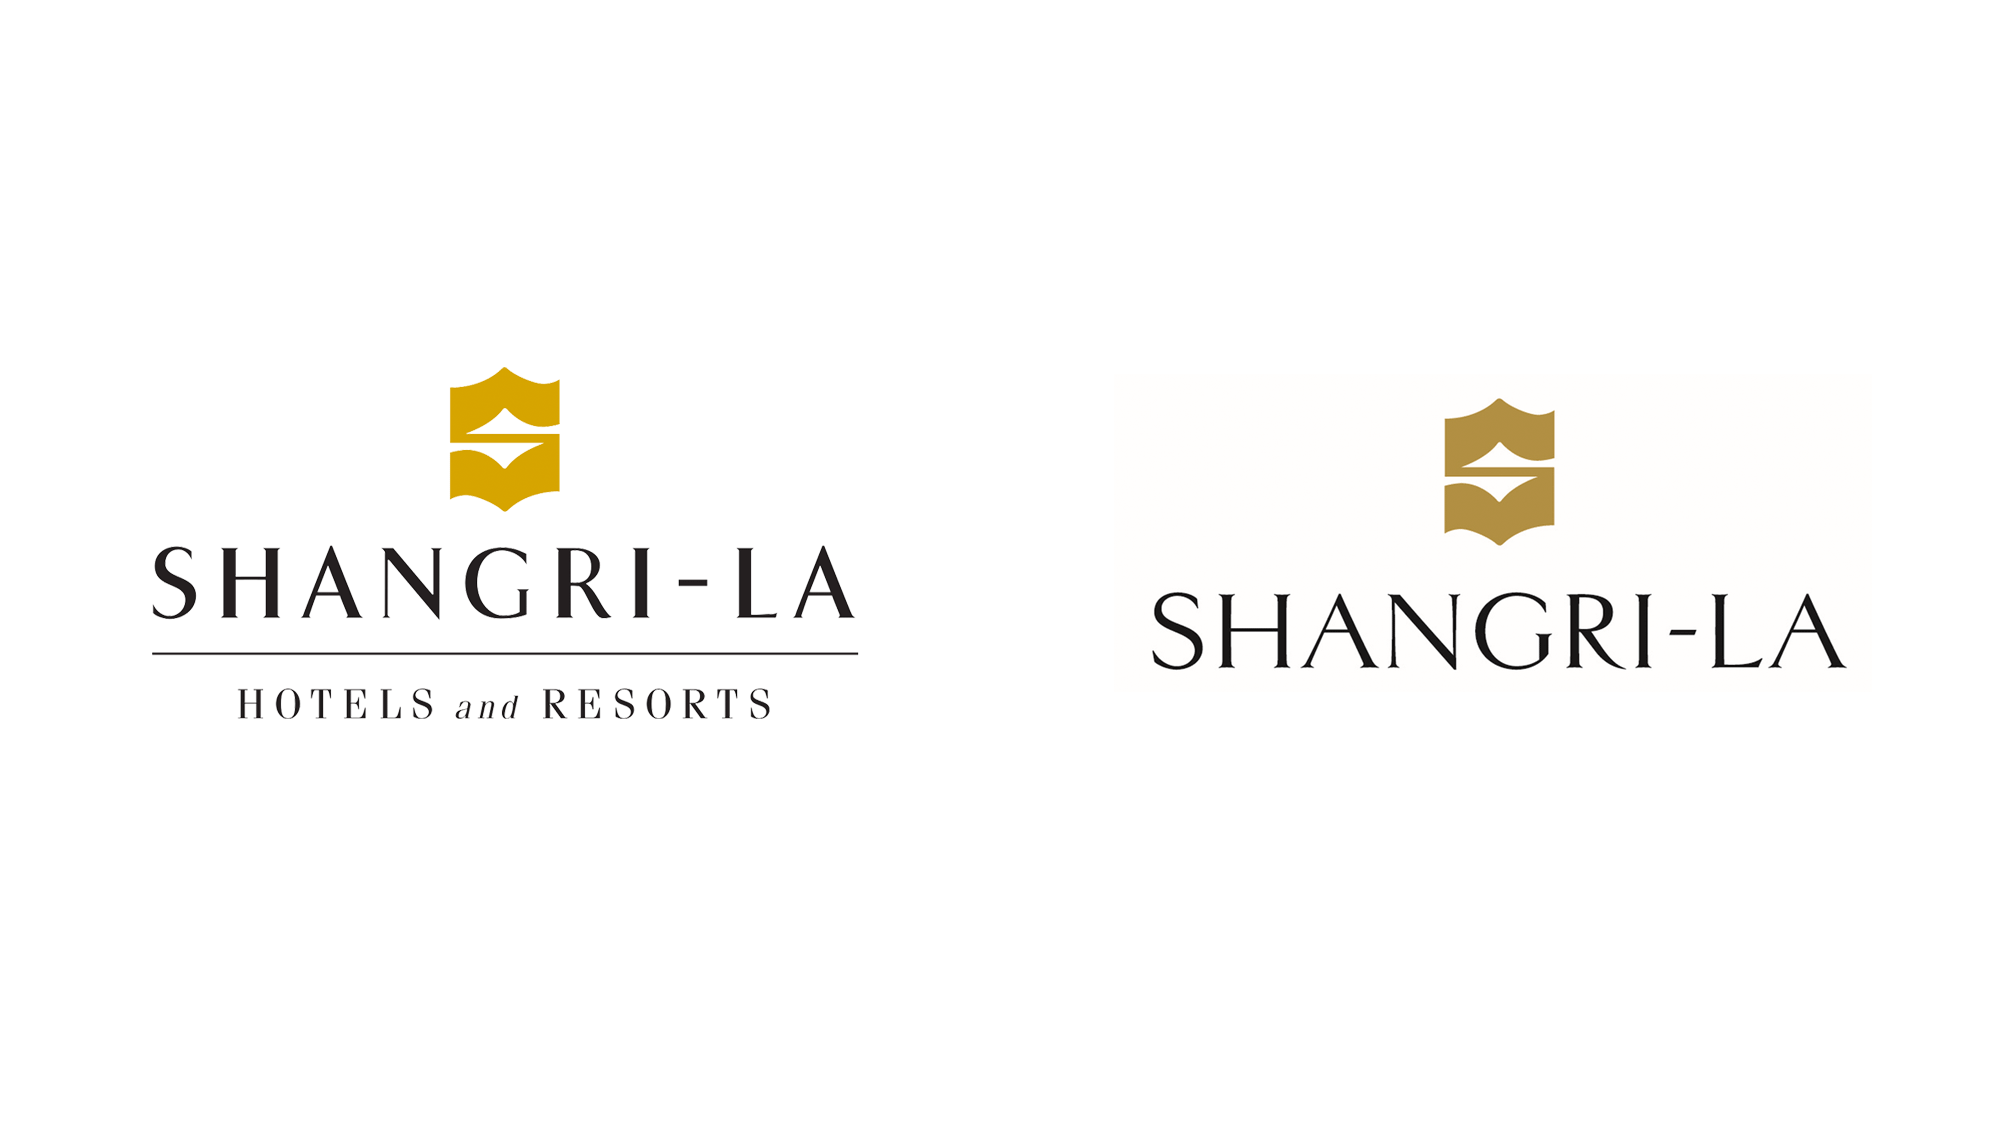 Brand New New Wordmark For Shangri La Hotels And Resorts